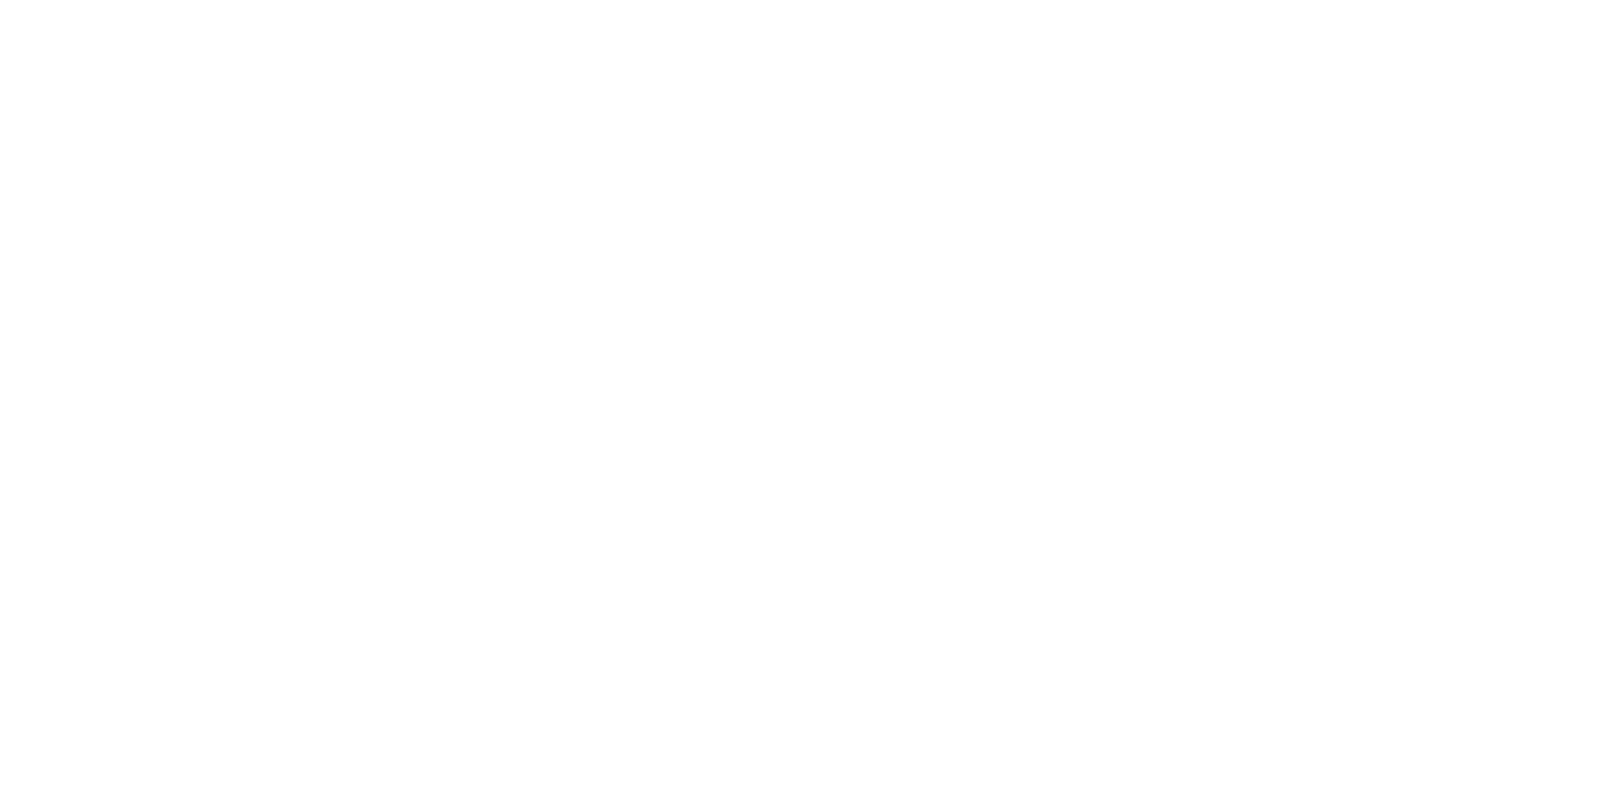 Tracy McDaniel Photography